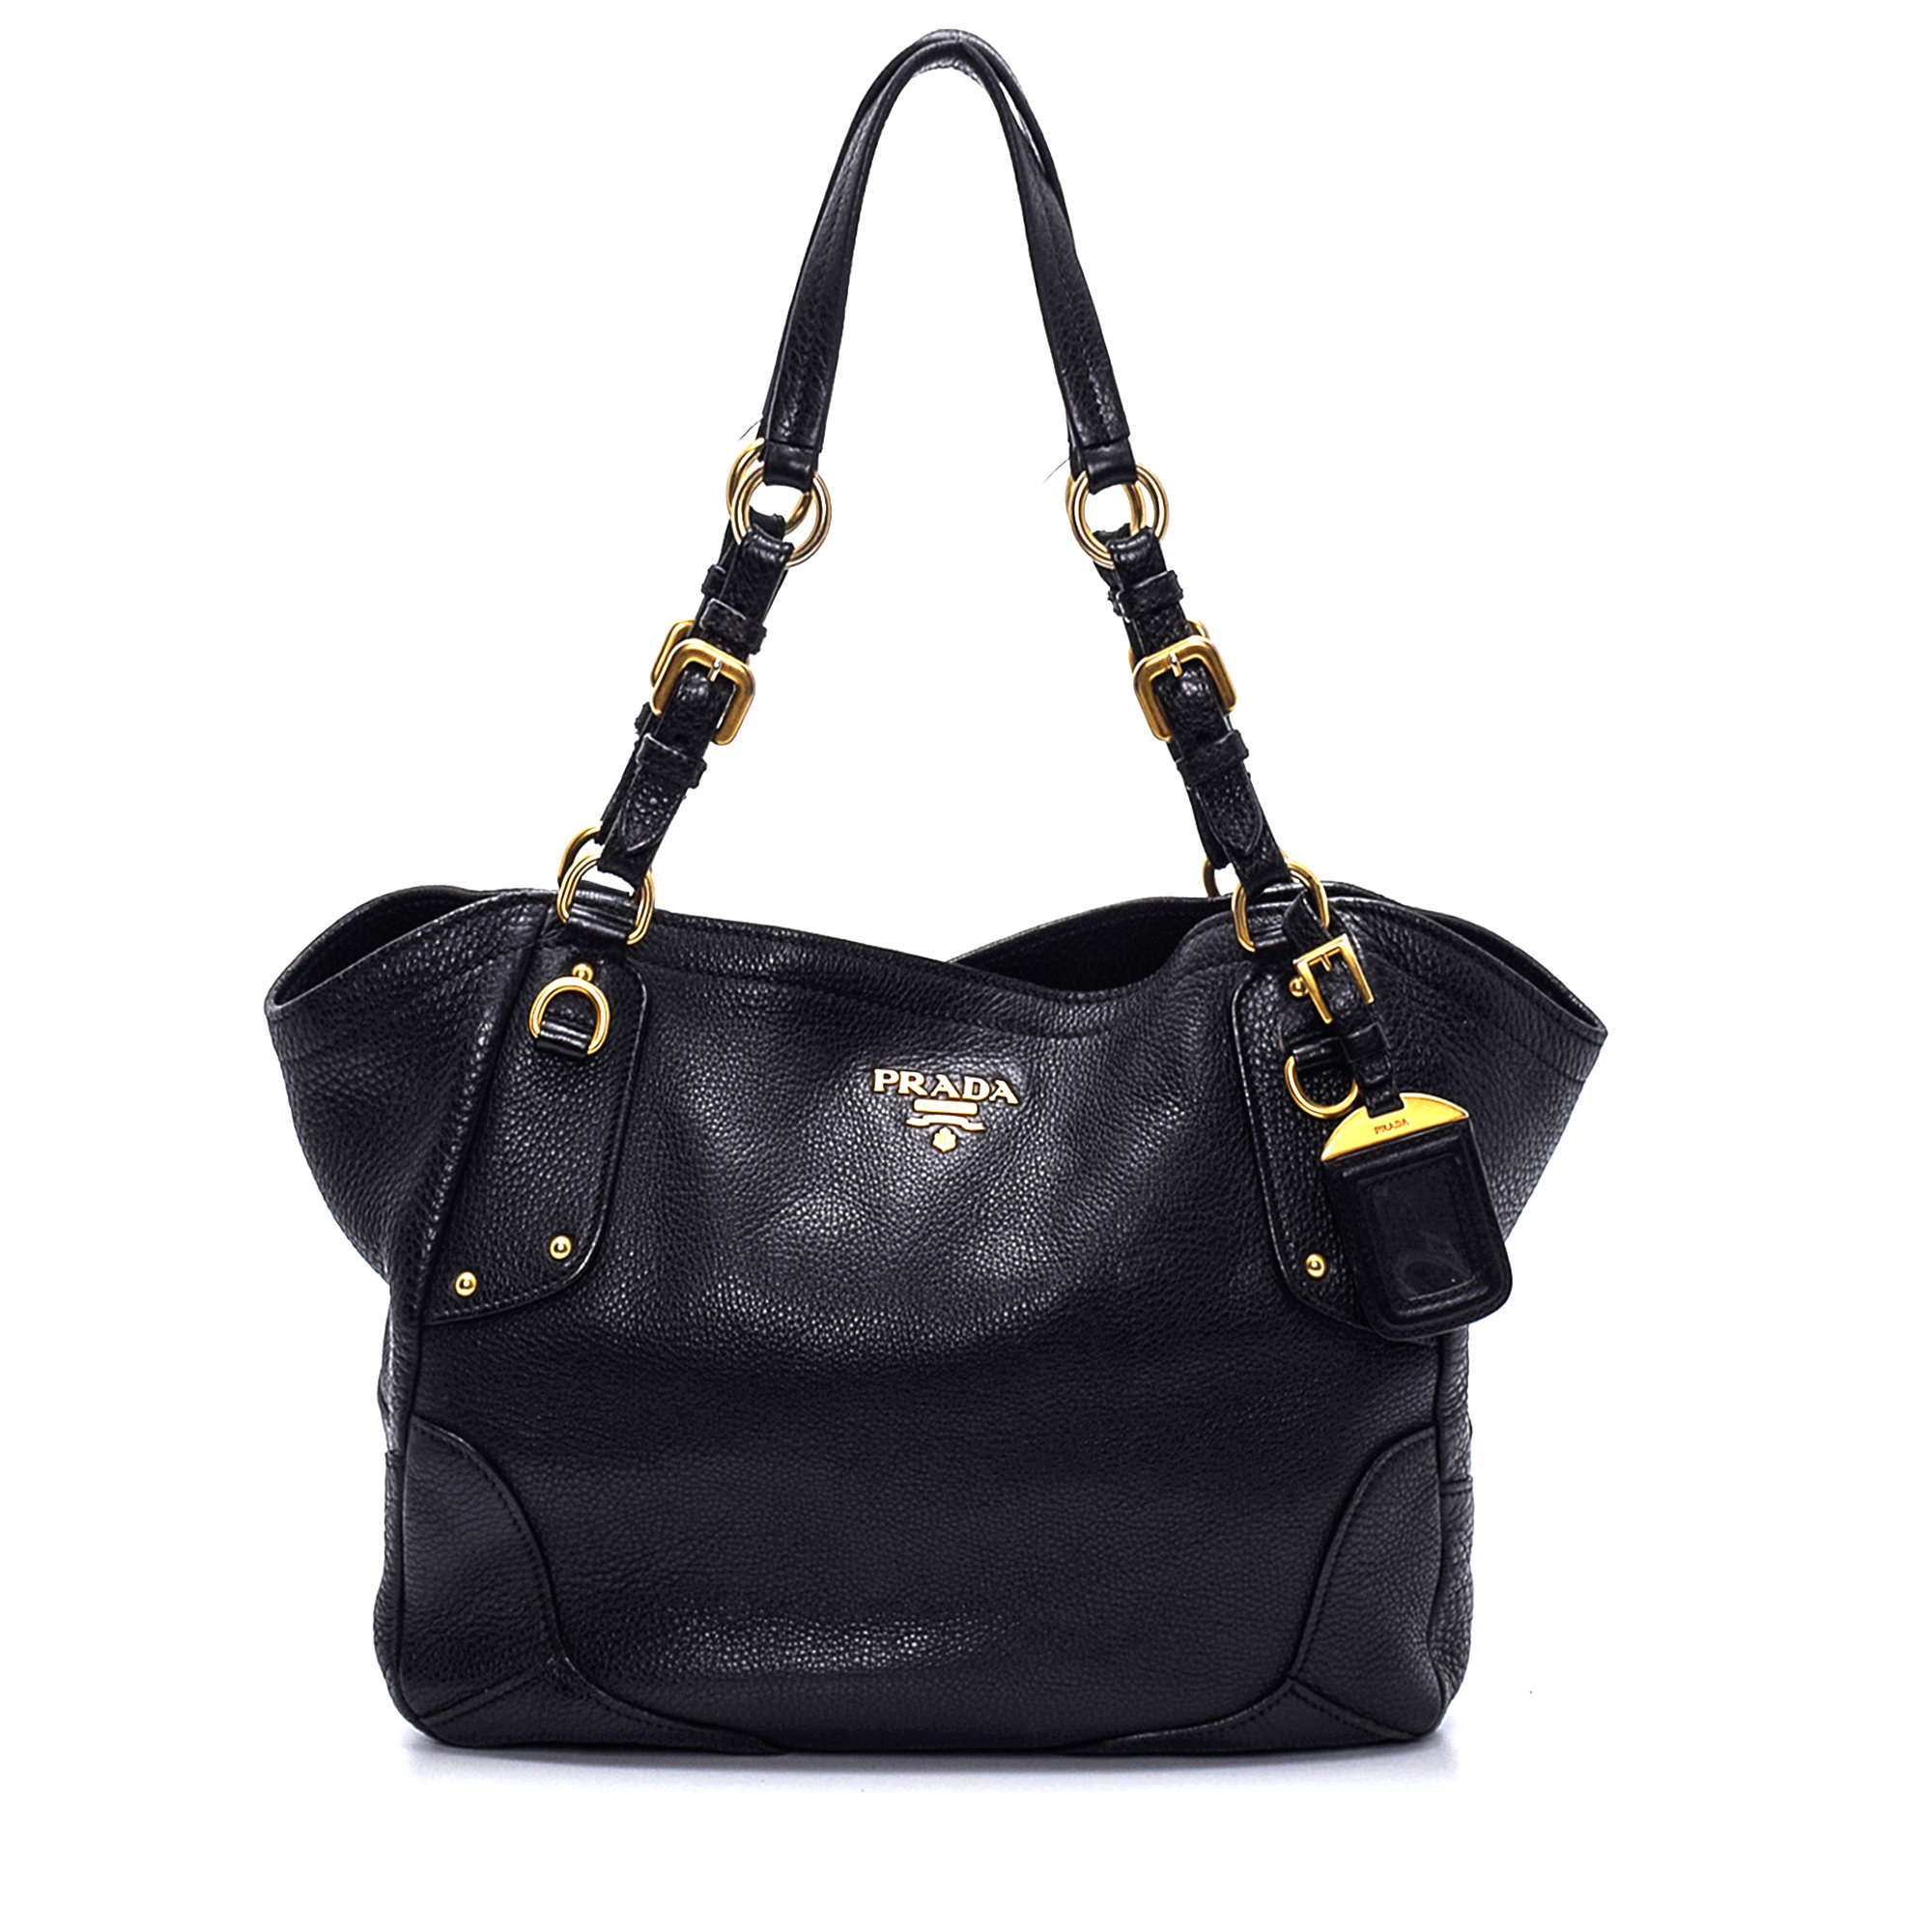 Prada - Black Vitello Daino Leather Tote Bag